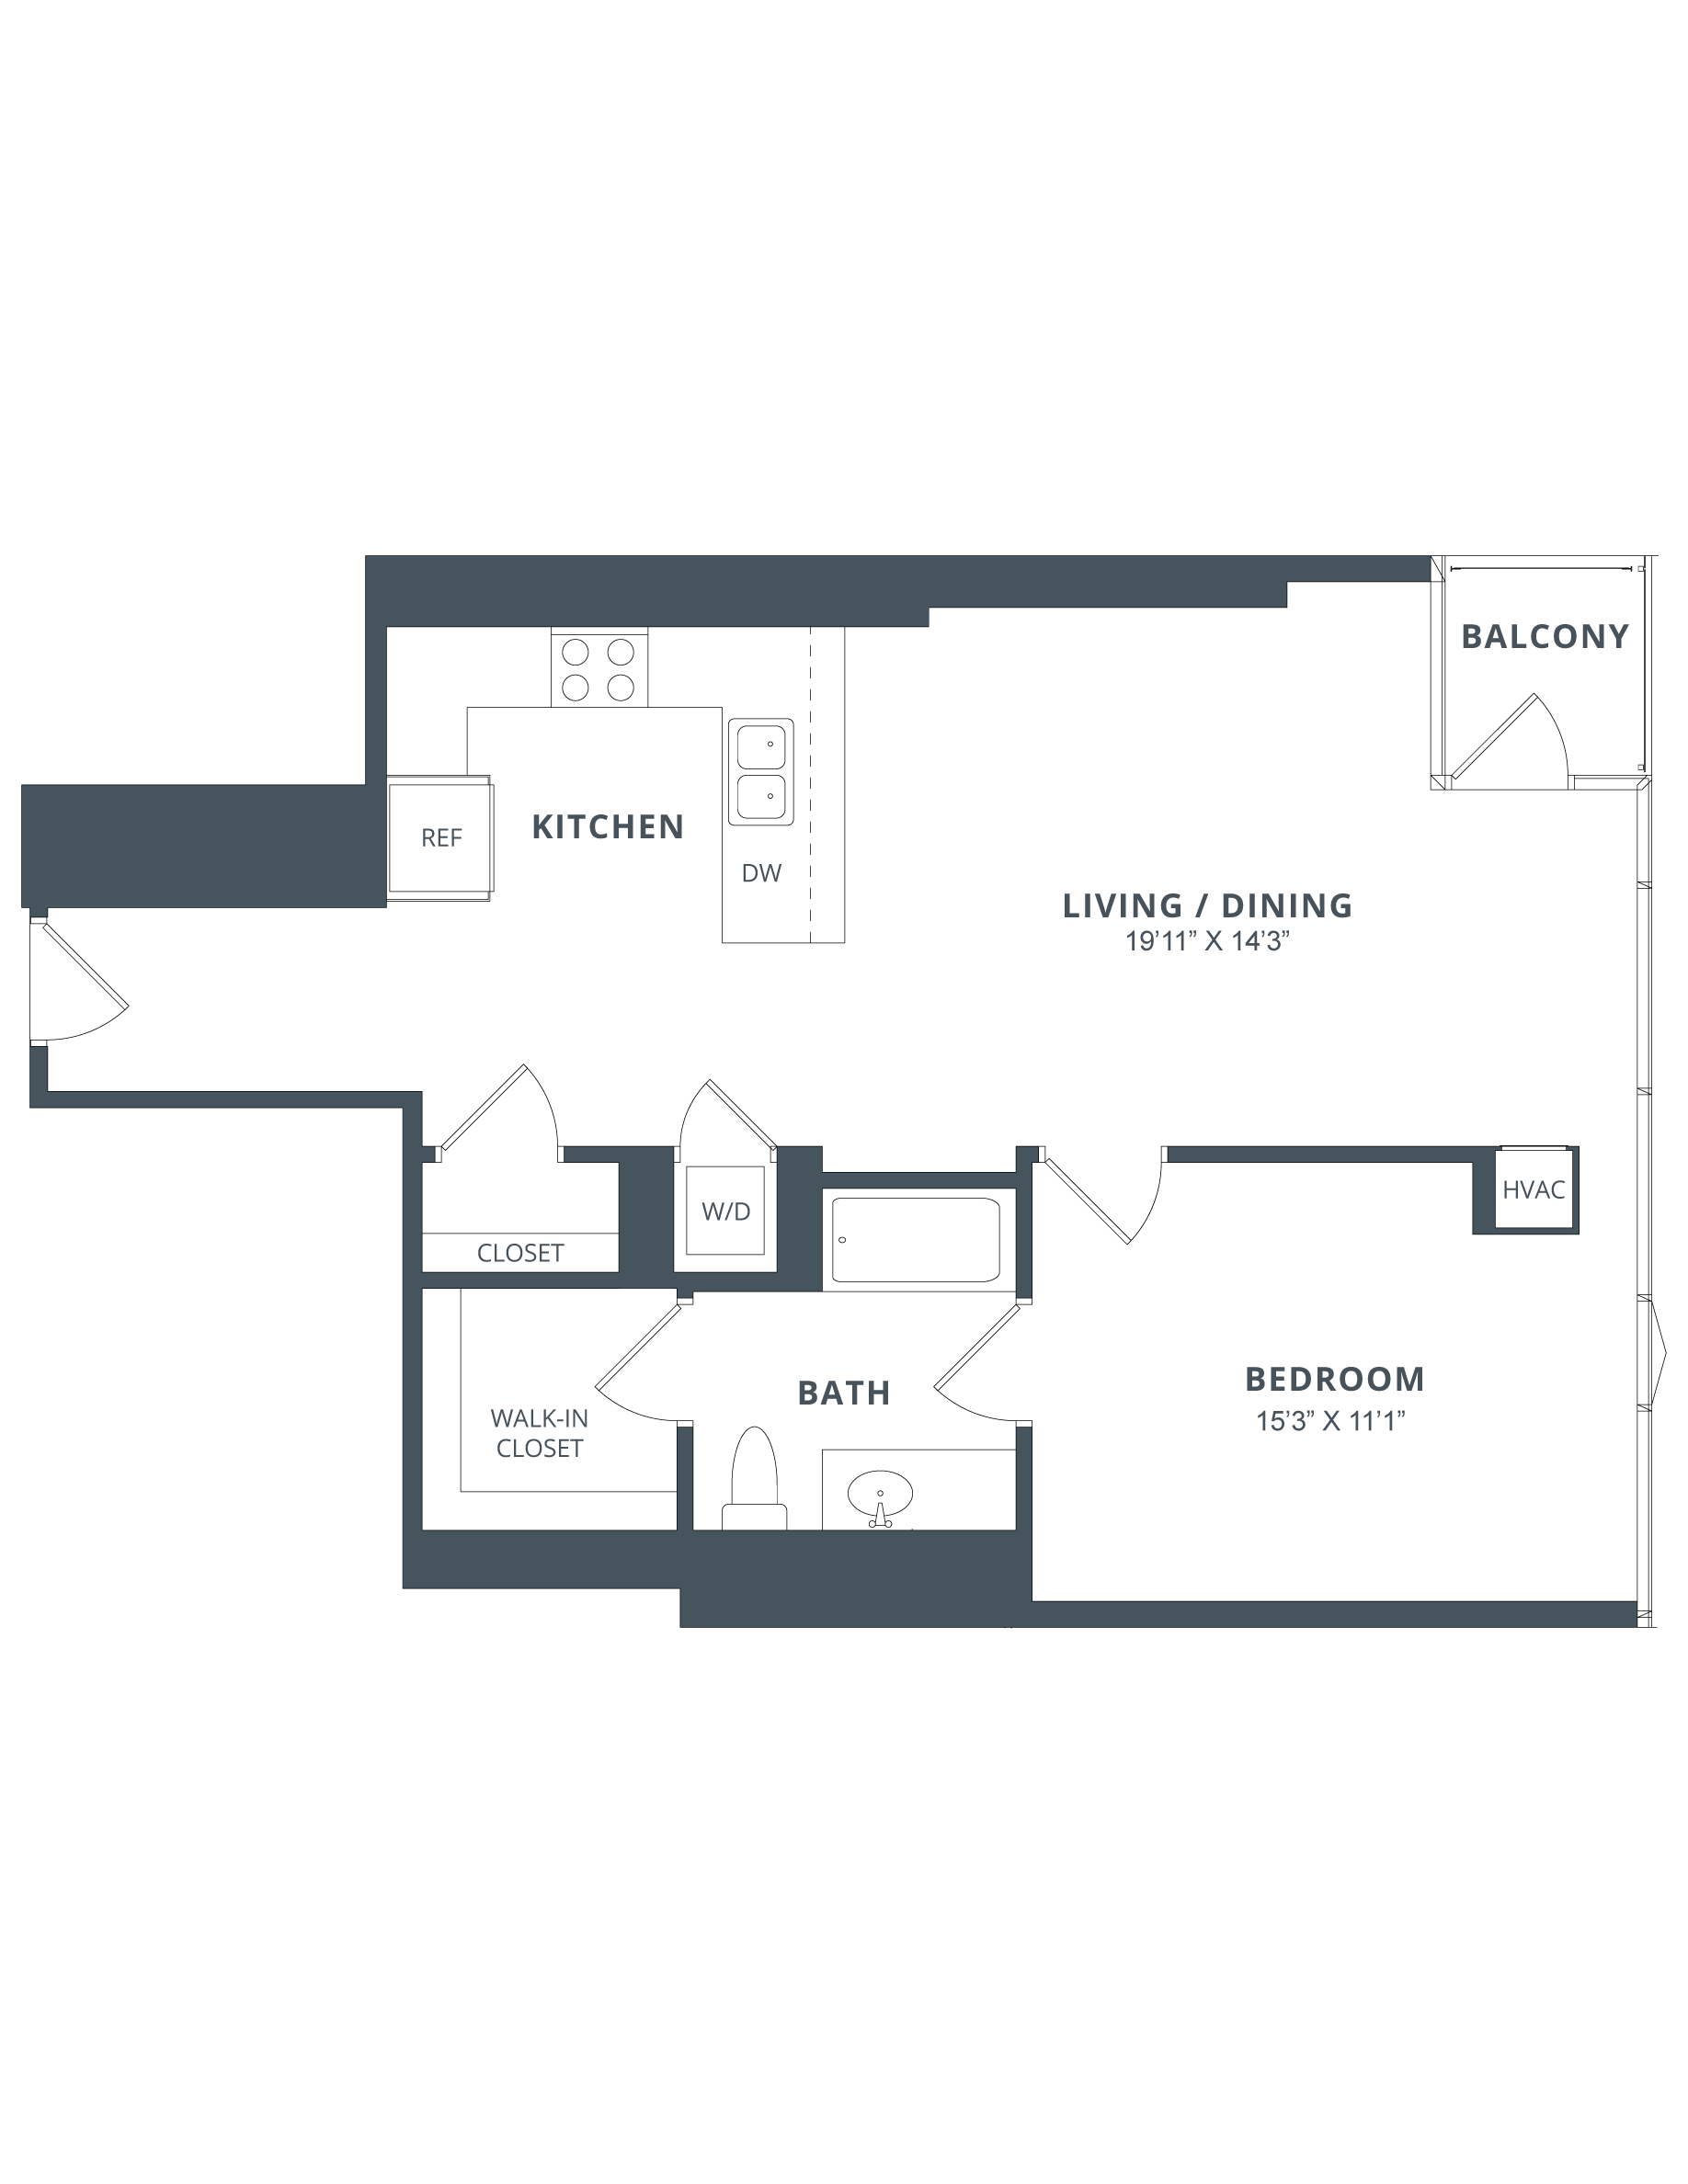 Apartment 2409 floorplan